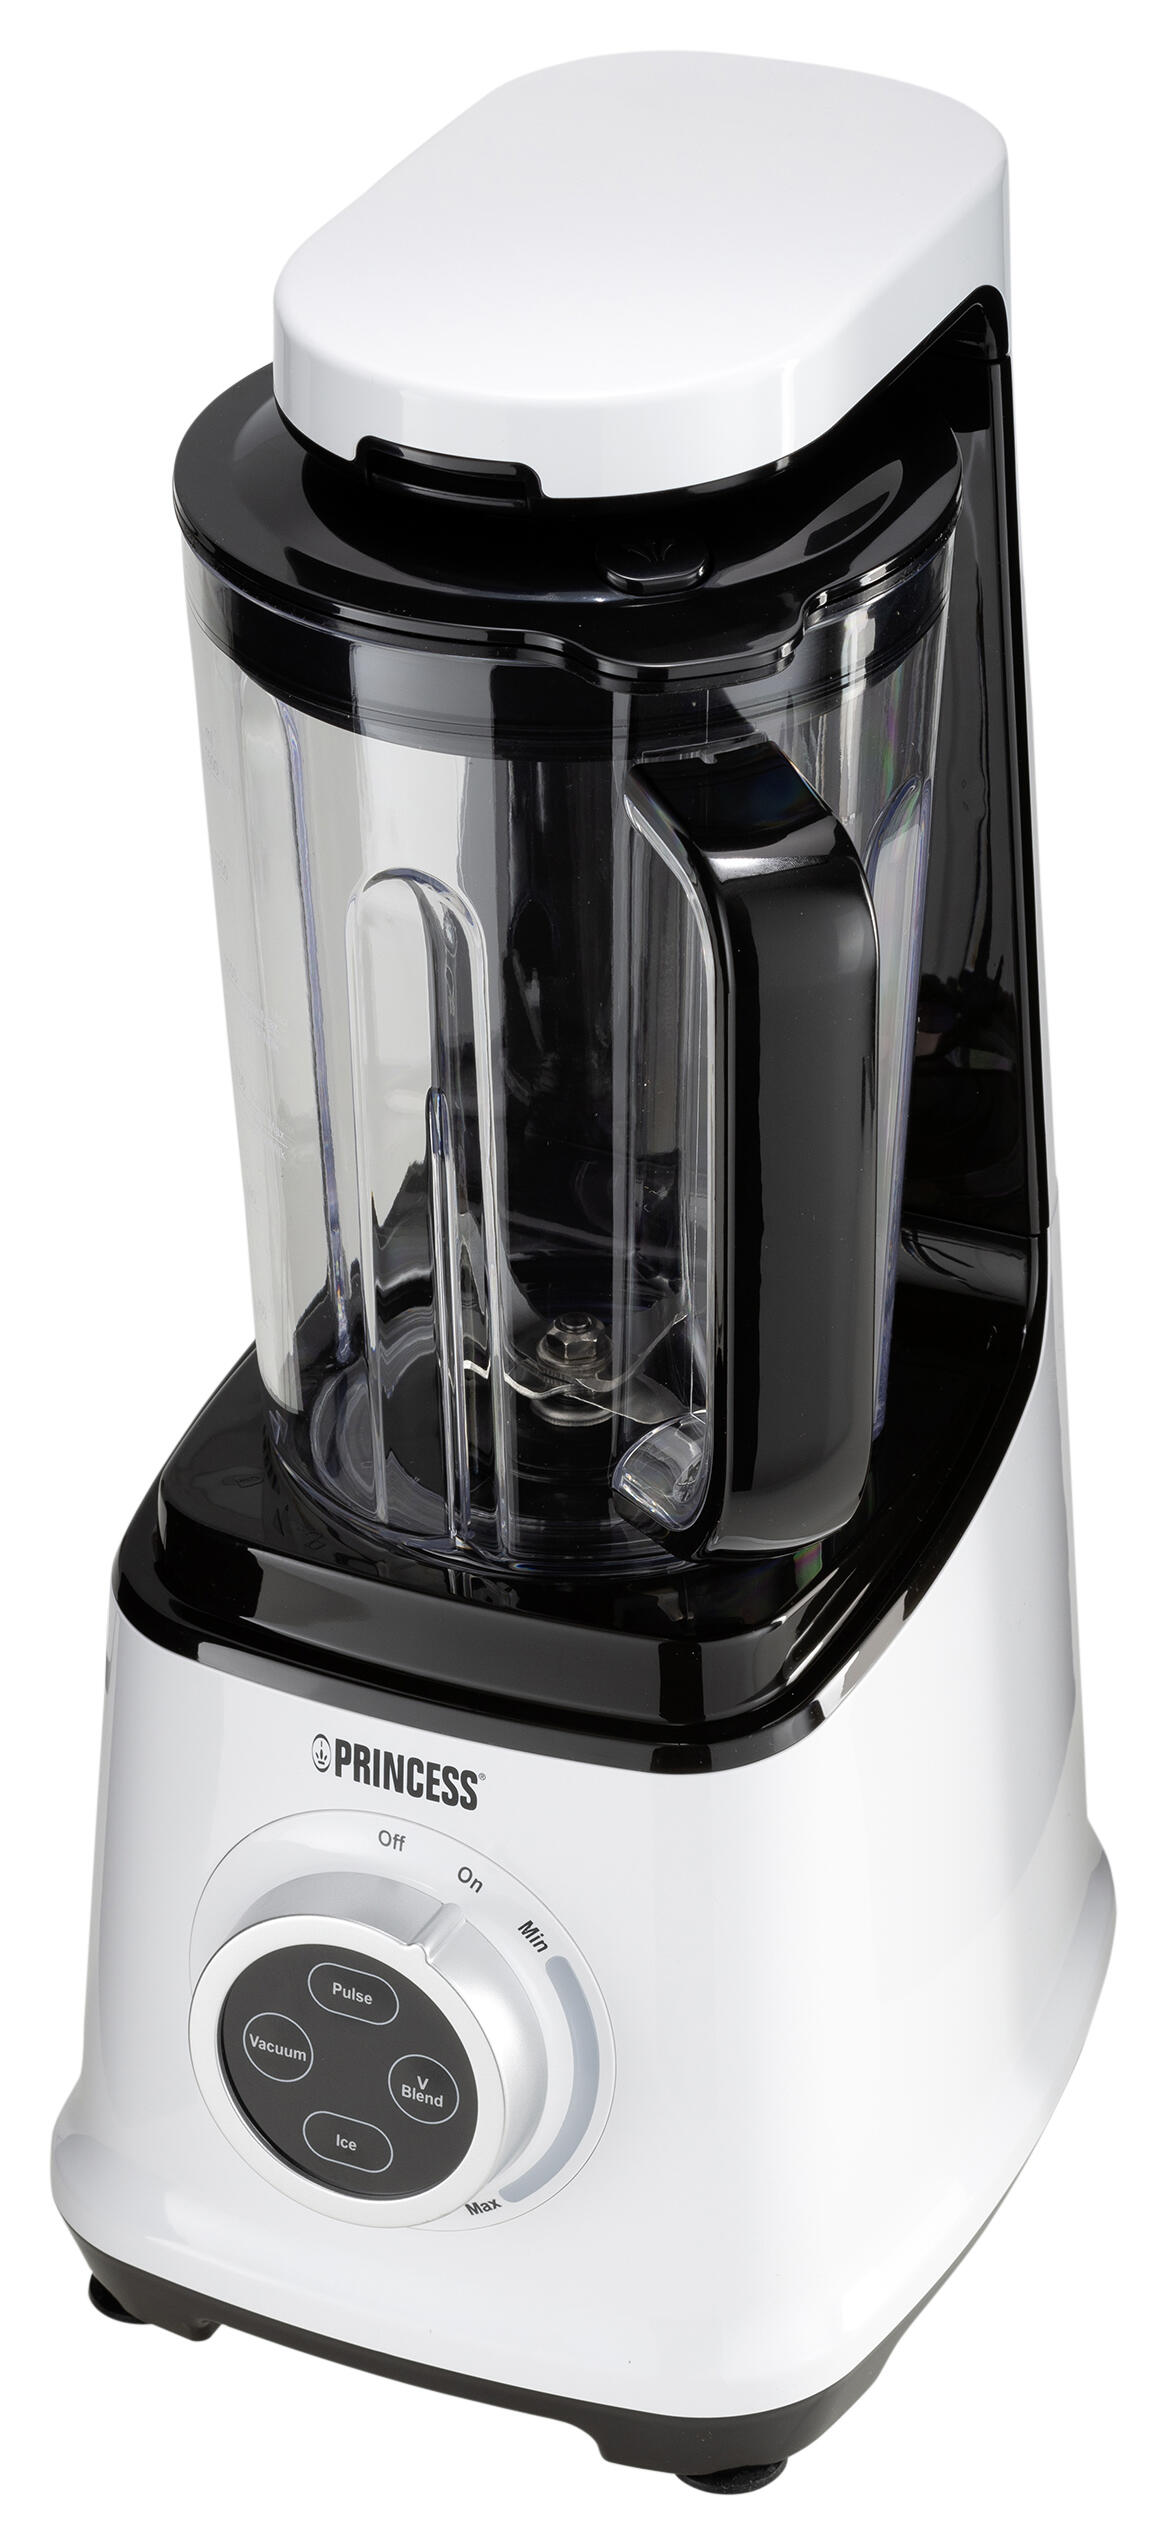 Test: Princess 219600 Vacuum blender |